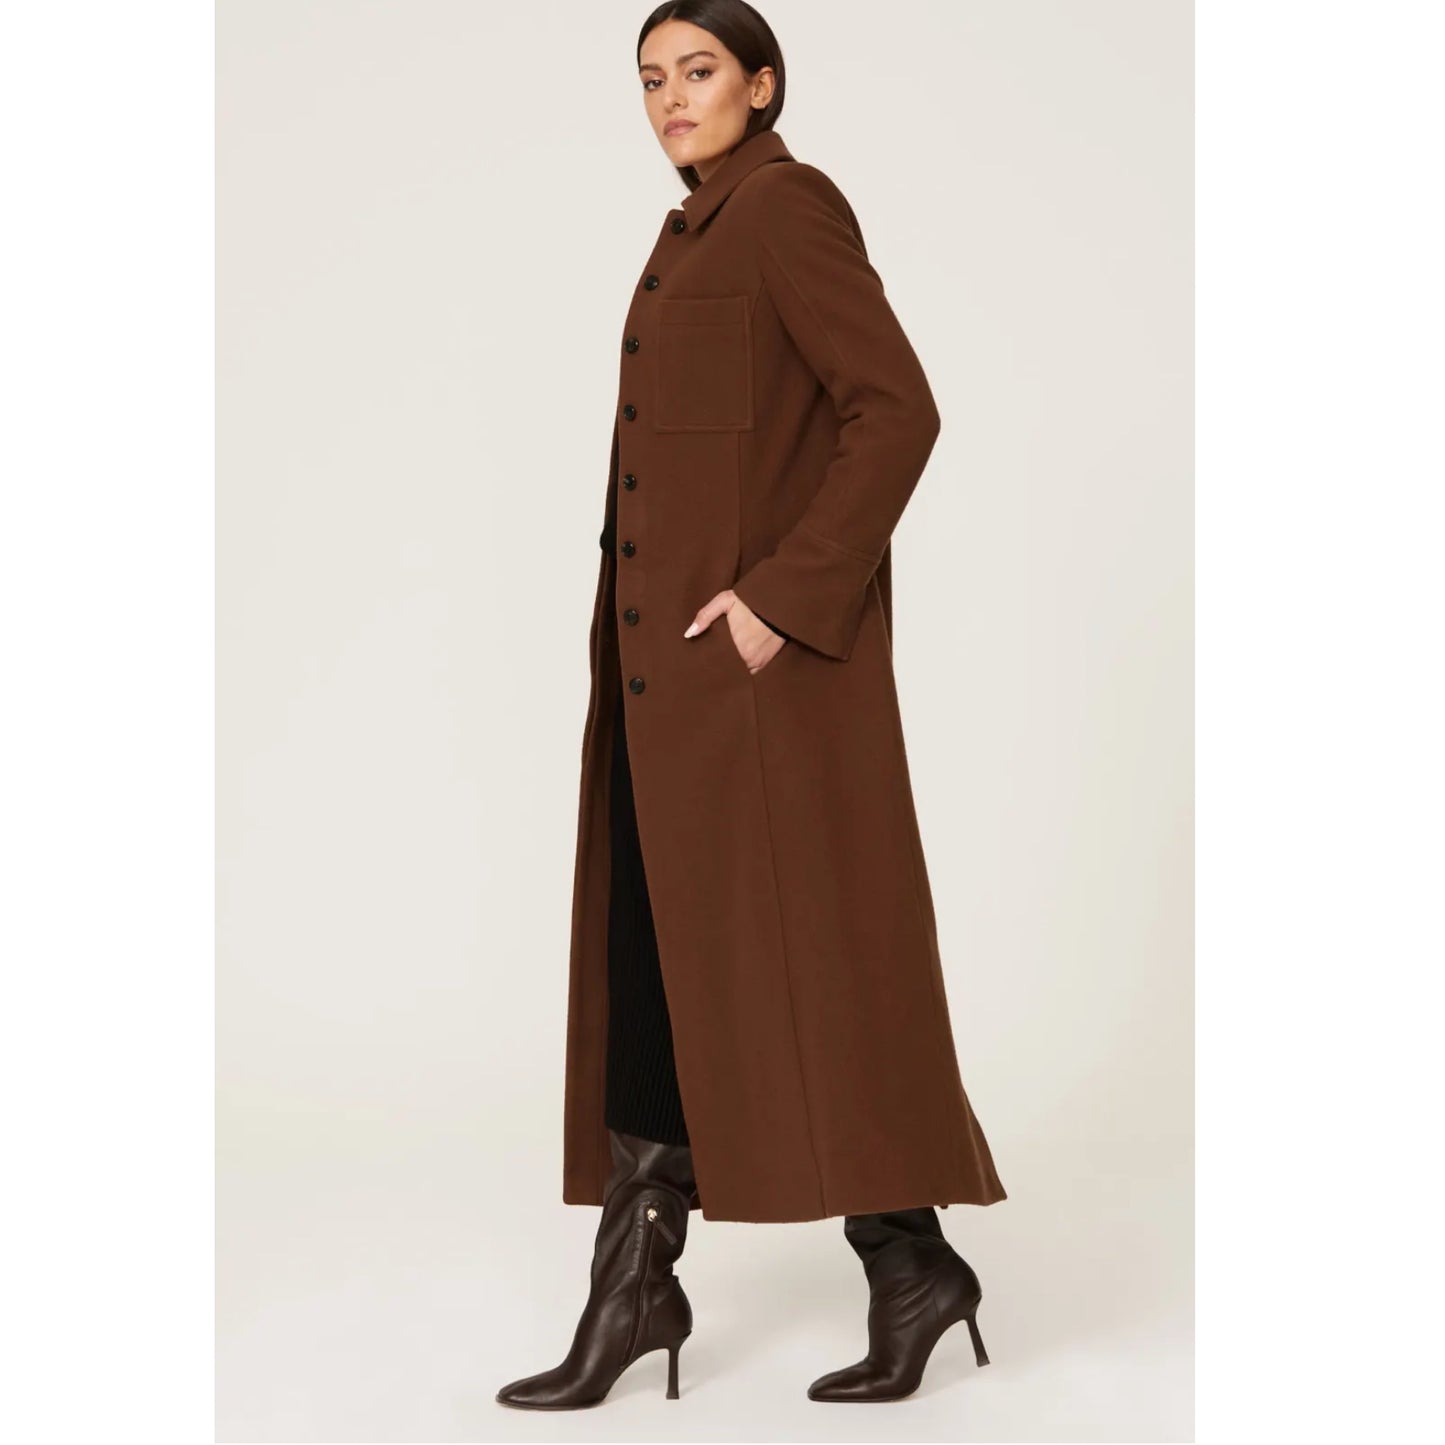 Victoria Beckham Wool Coat